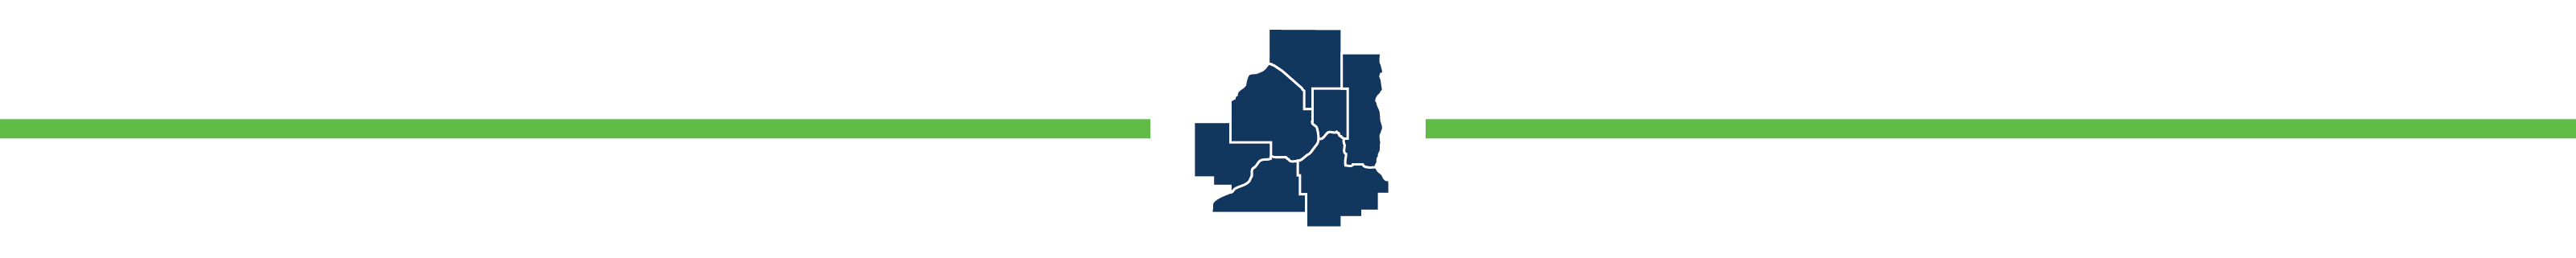 icon representing the Twin Cities metro area